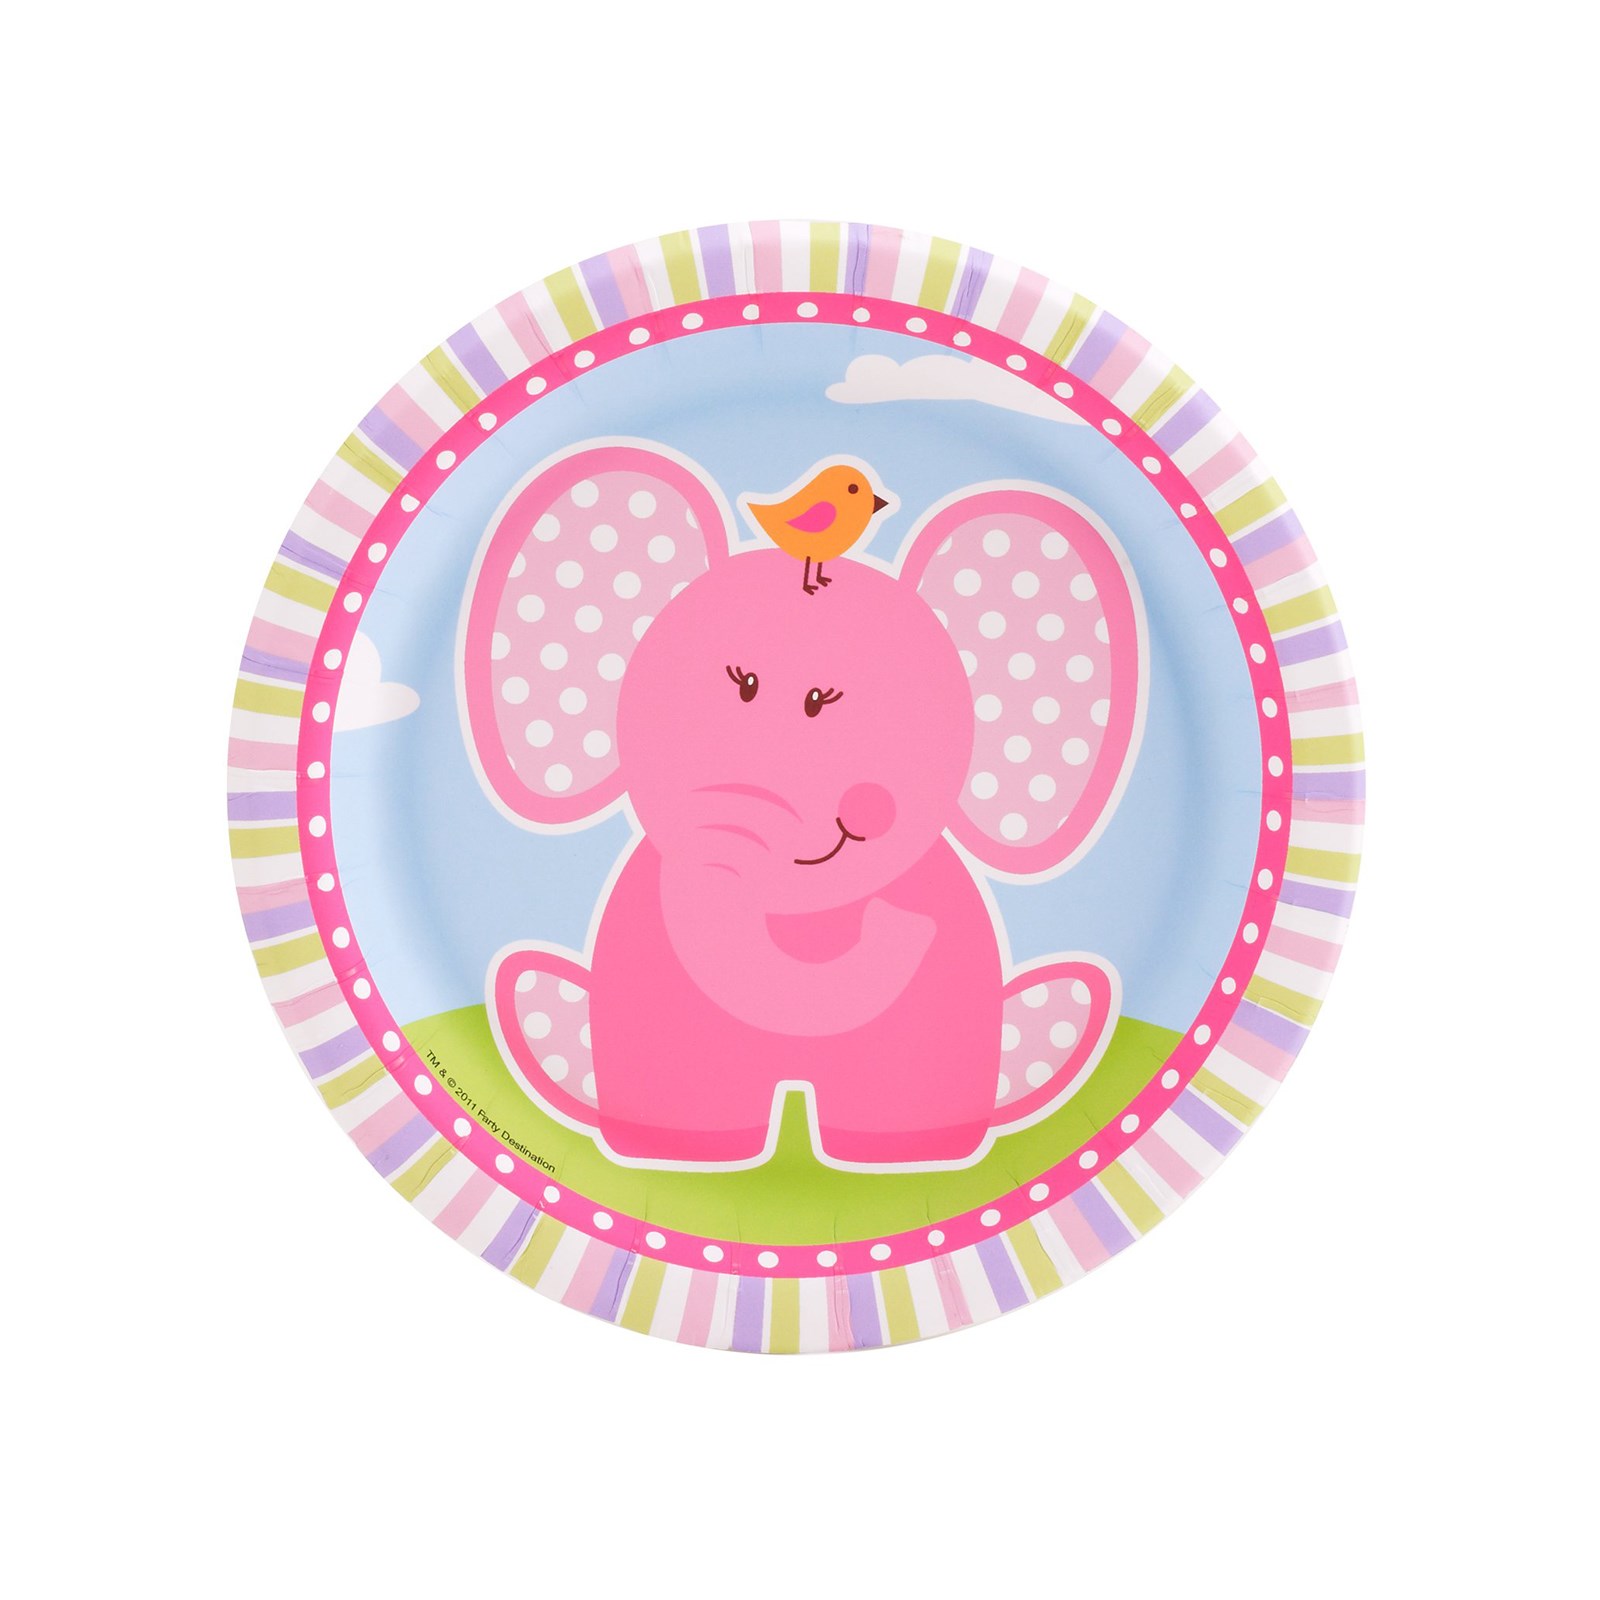 Pink Elephants Party Supplies | BirthdayExpress.com